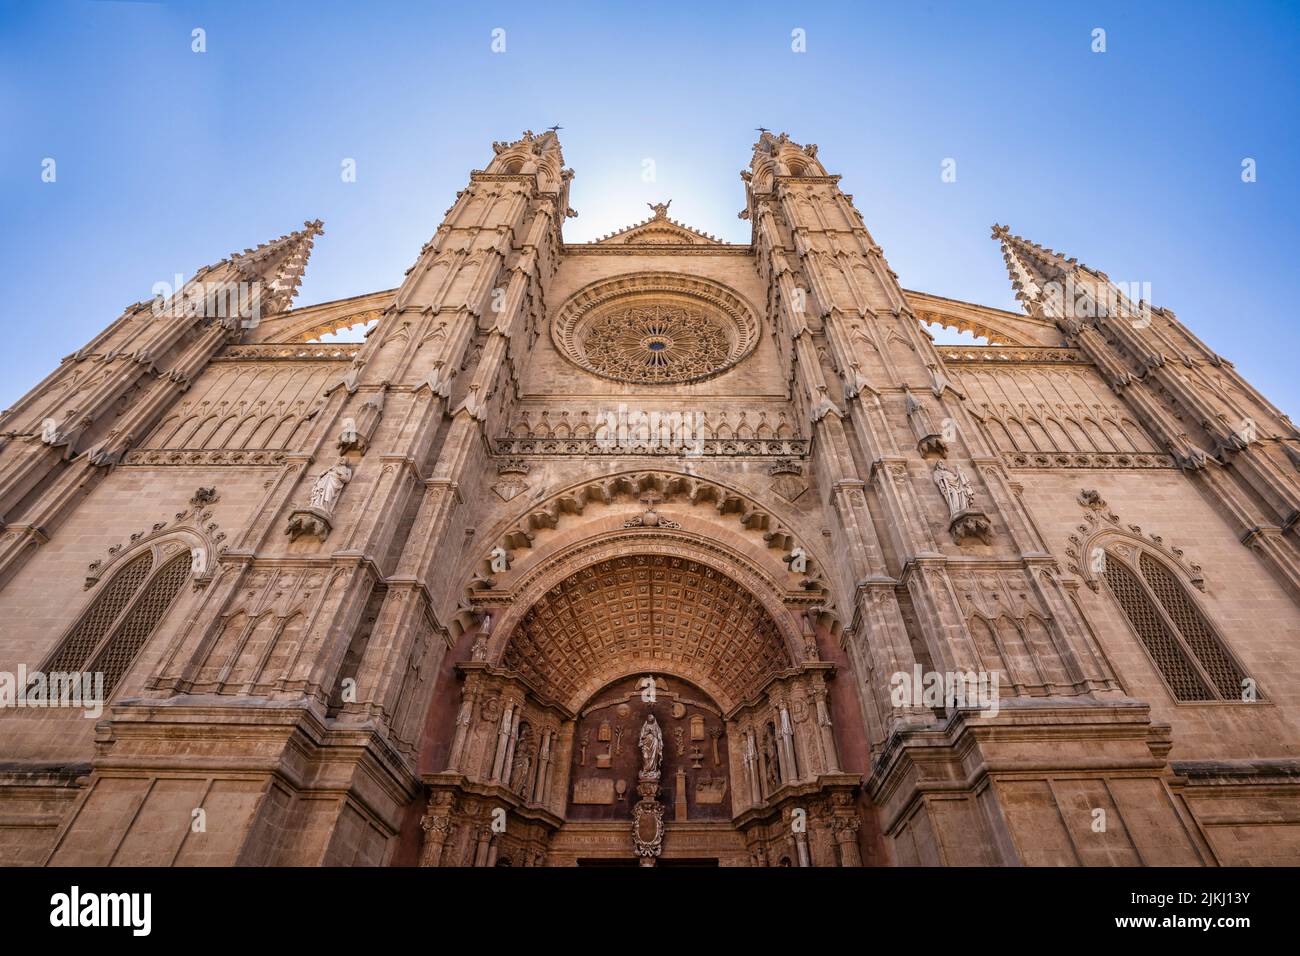 Spain, Balearic islands, Mallorca, Palma. The Cathedral of Santa Maria of Palma (Cathedral of St. Mary of Palma) also konwn as La Seu Stock Photo